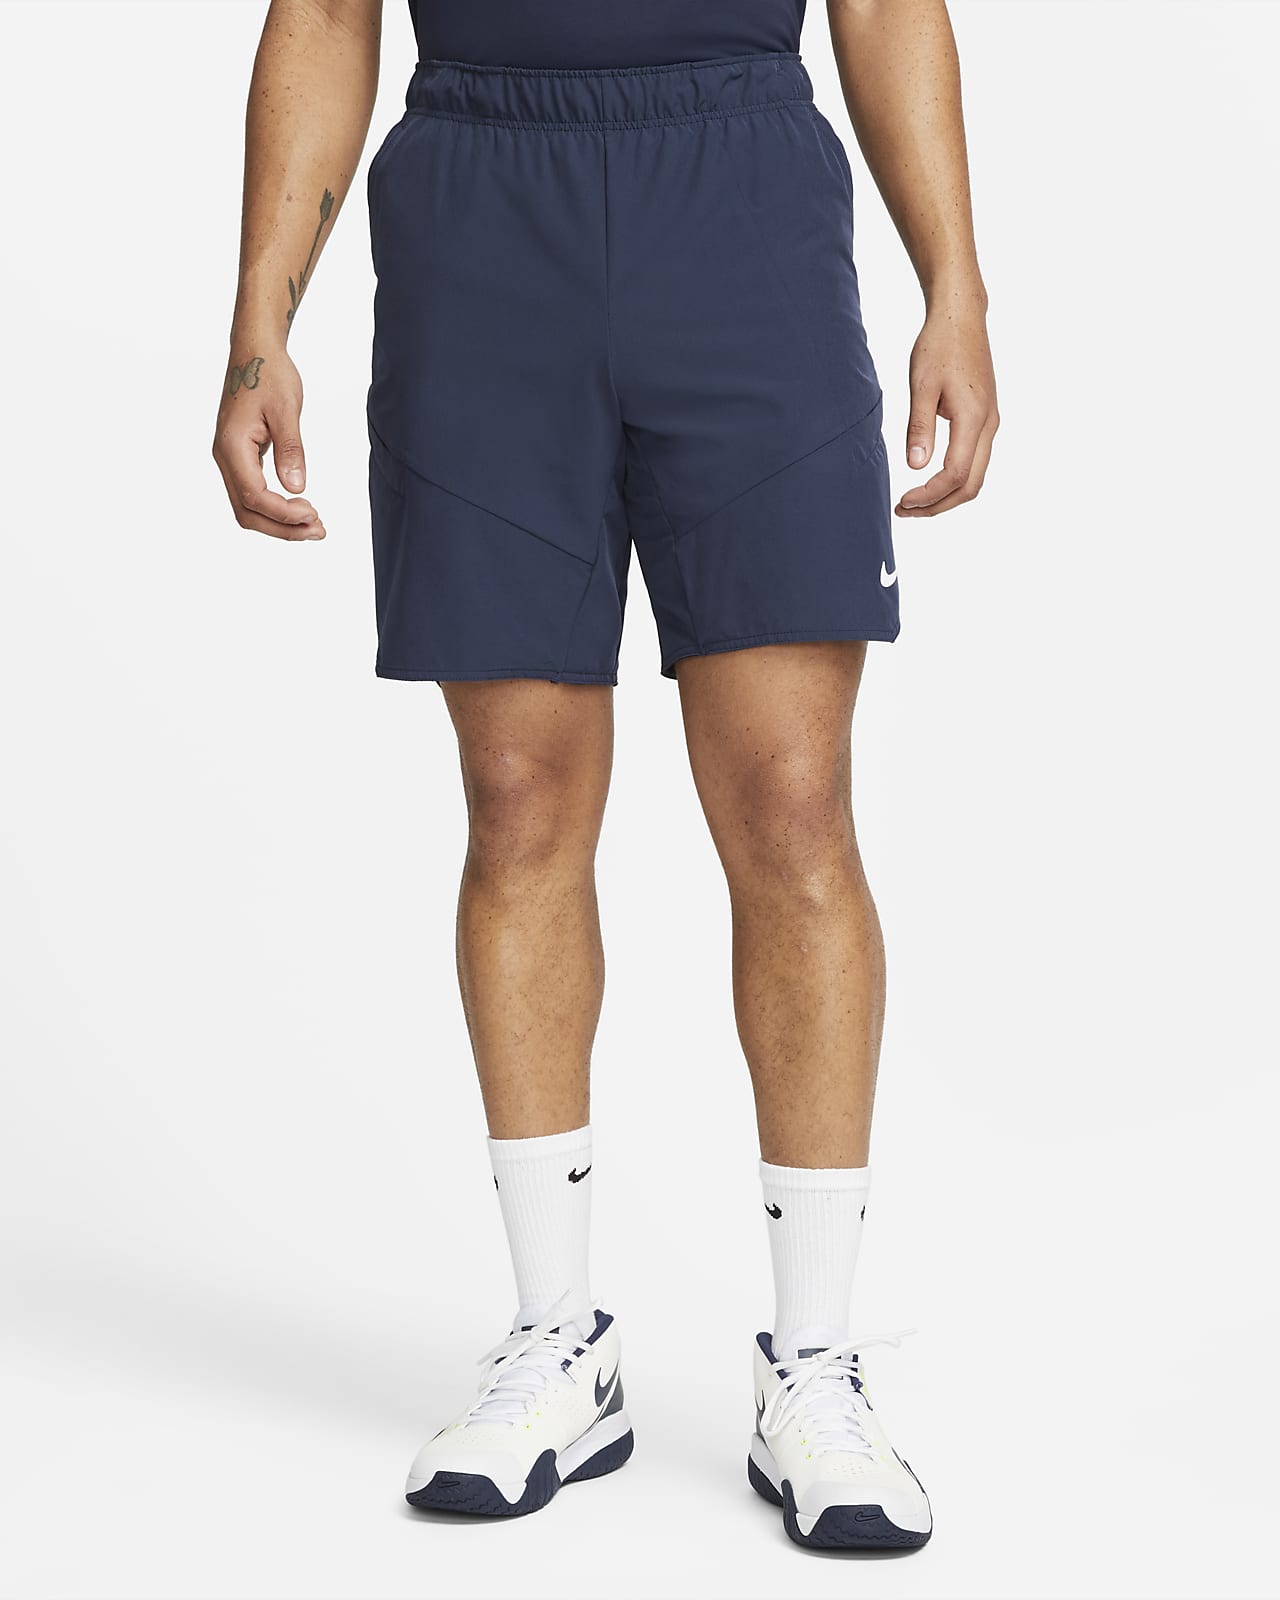 NikeCourt Dri-FIT Advantage Men's Tennis Shorts